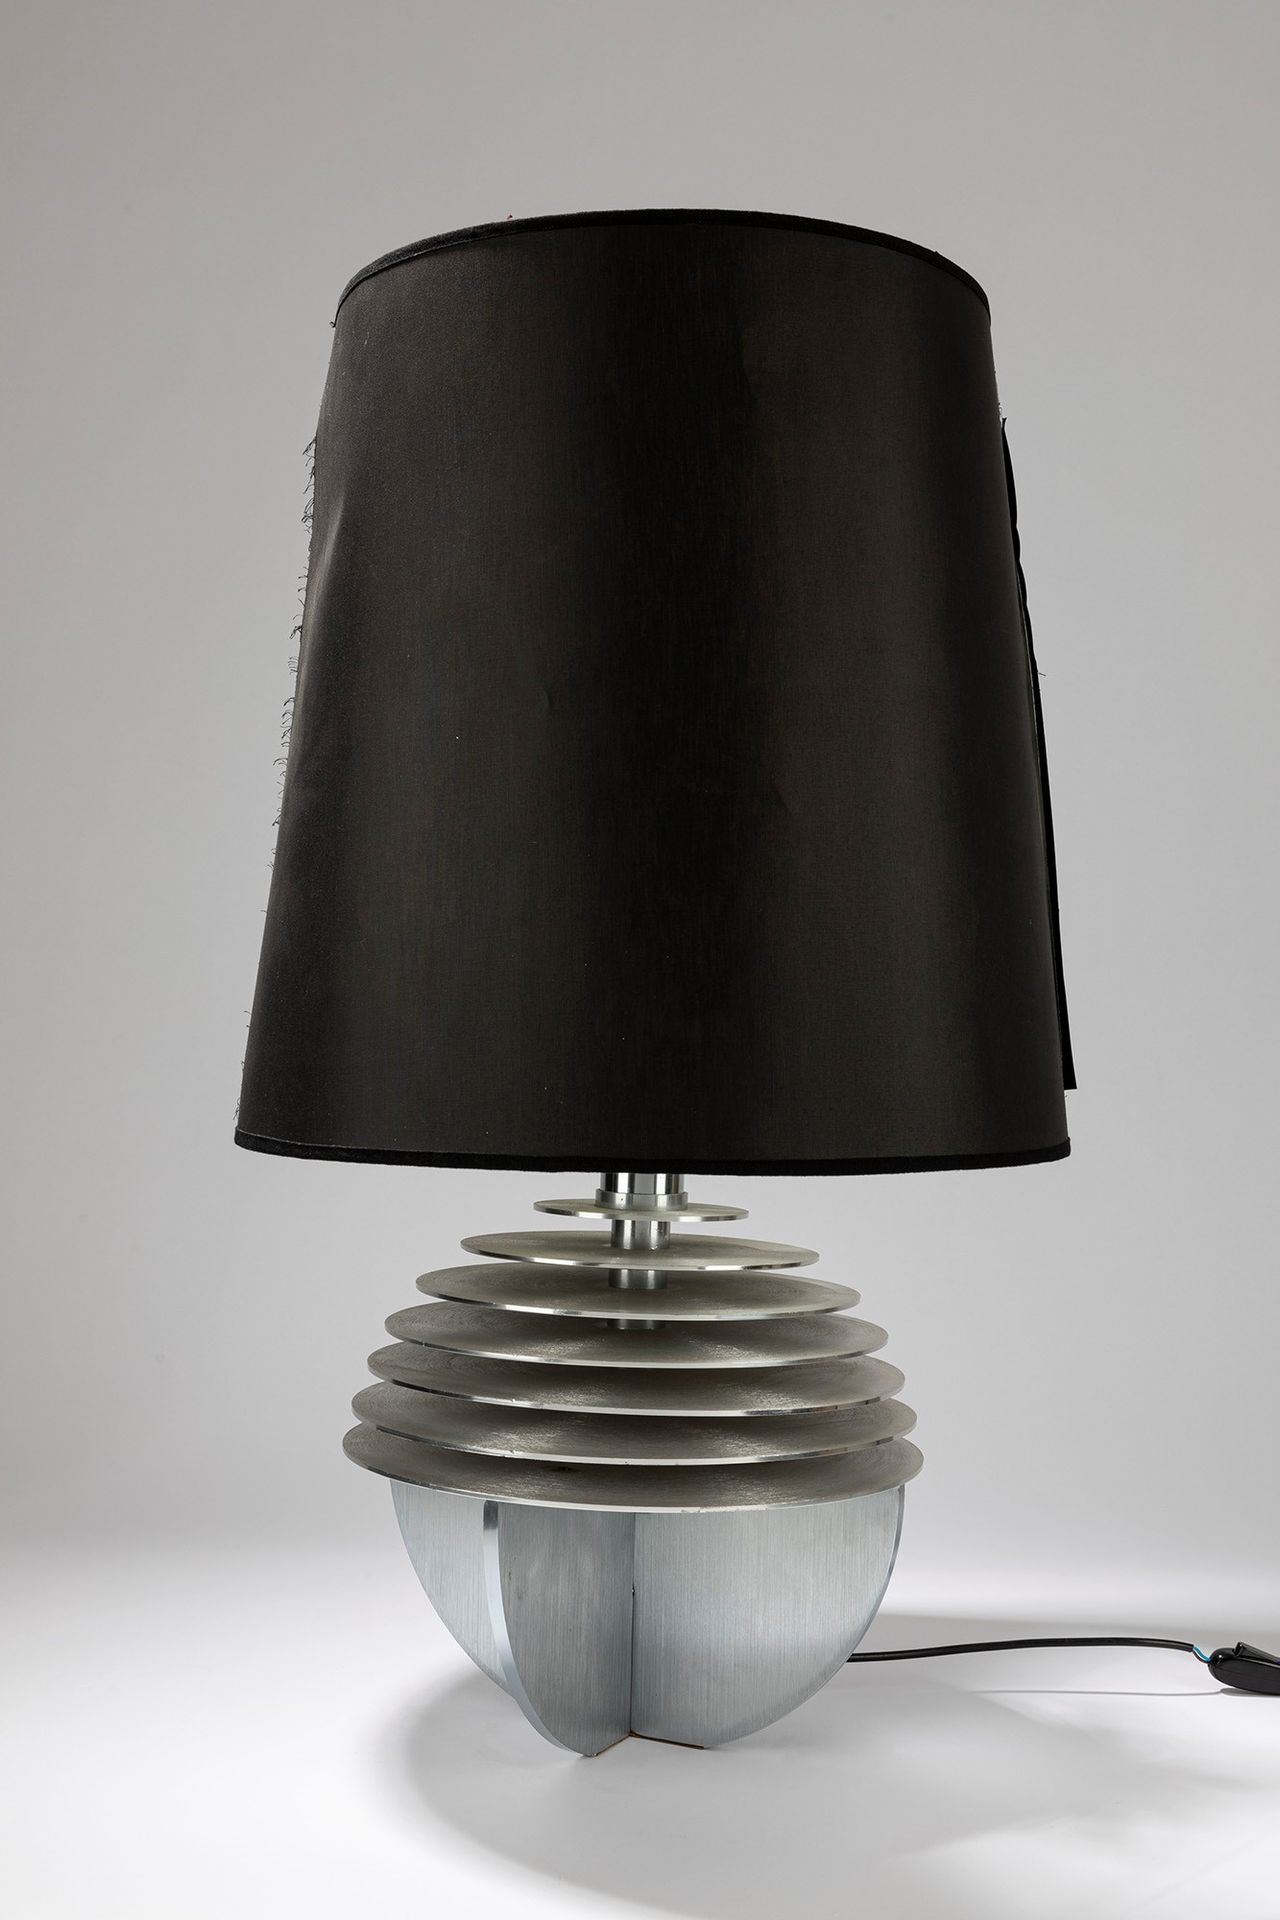 ITALIAN MANUFACTURE Lámpara de mesa, 1970 aprox.

Cm h 84,5 x 40
metal.